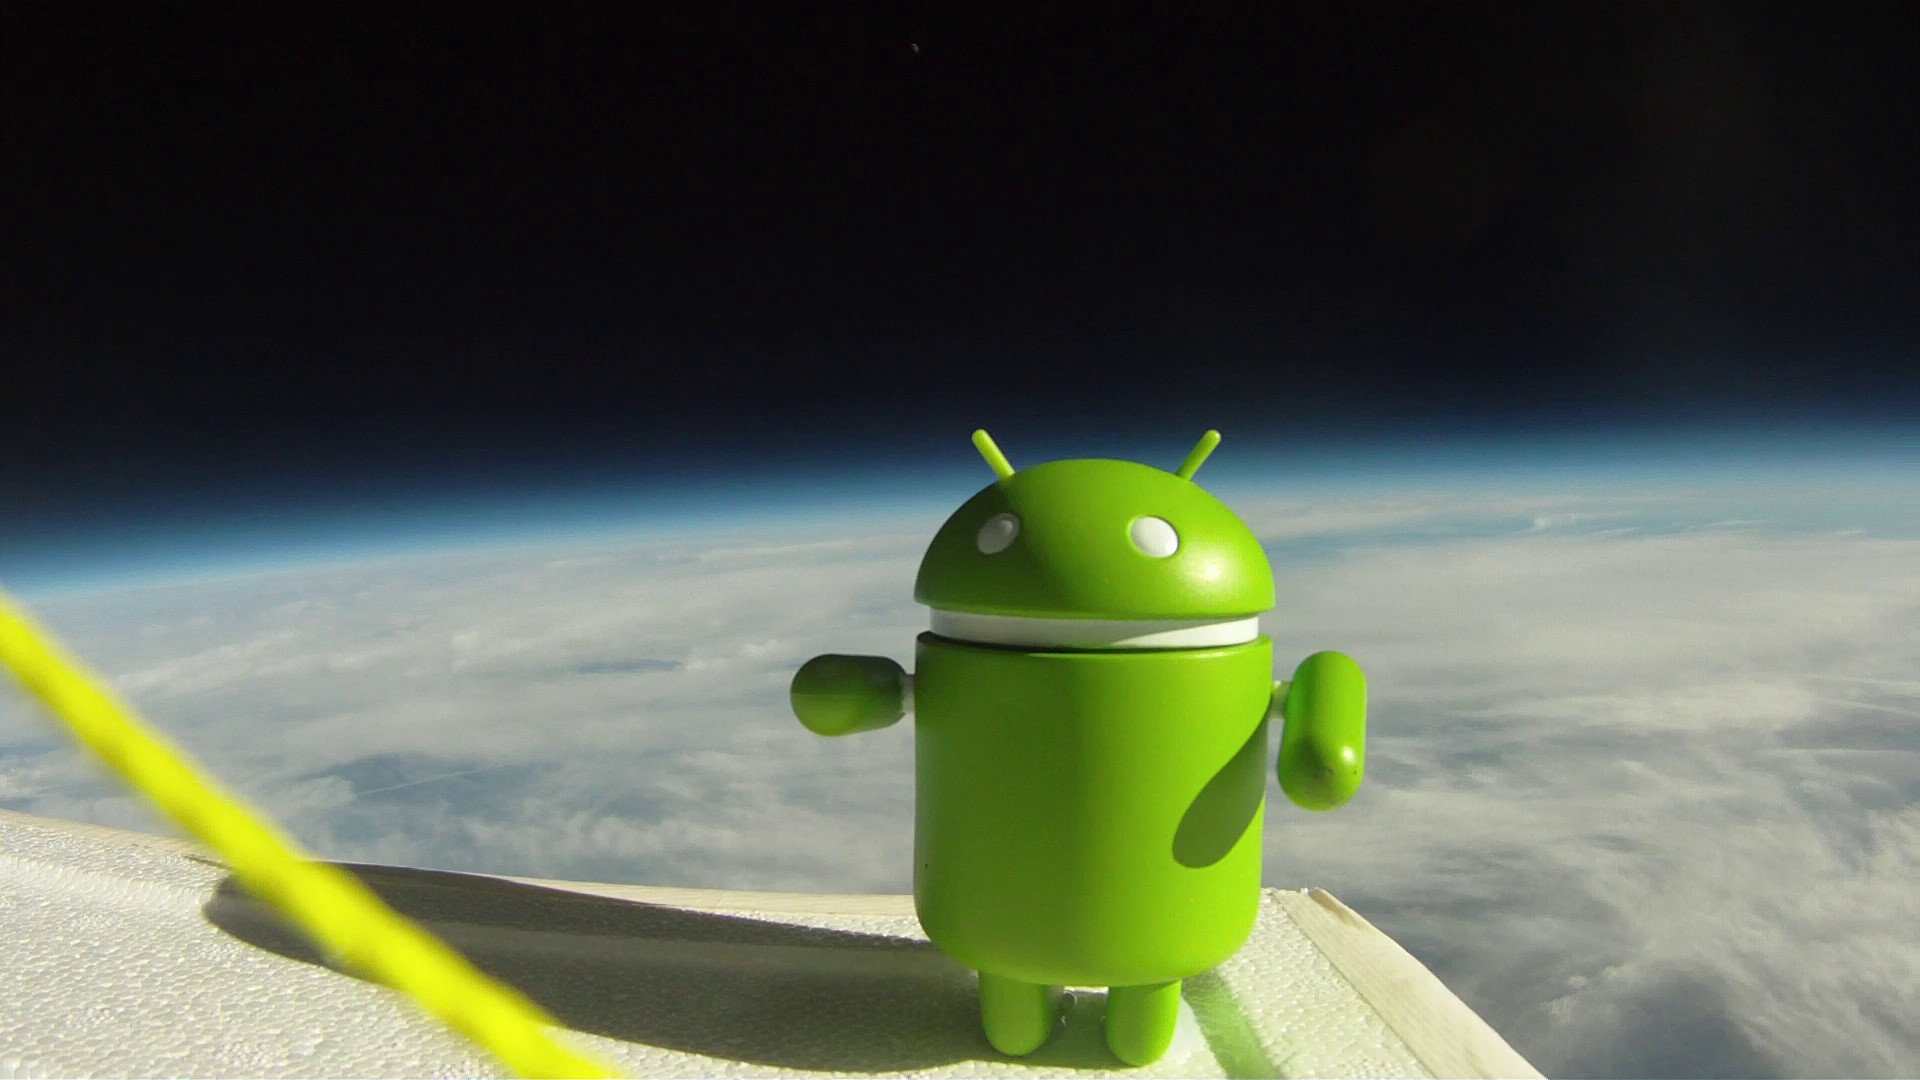 Google andromeda android chrome os fusione 4 ottobre